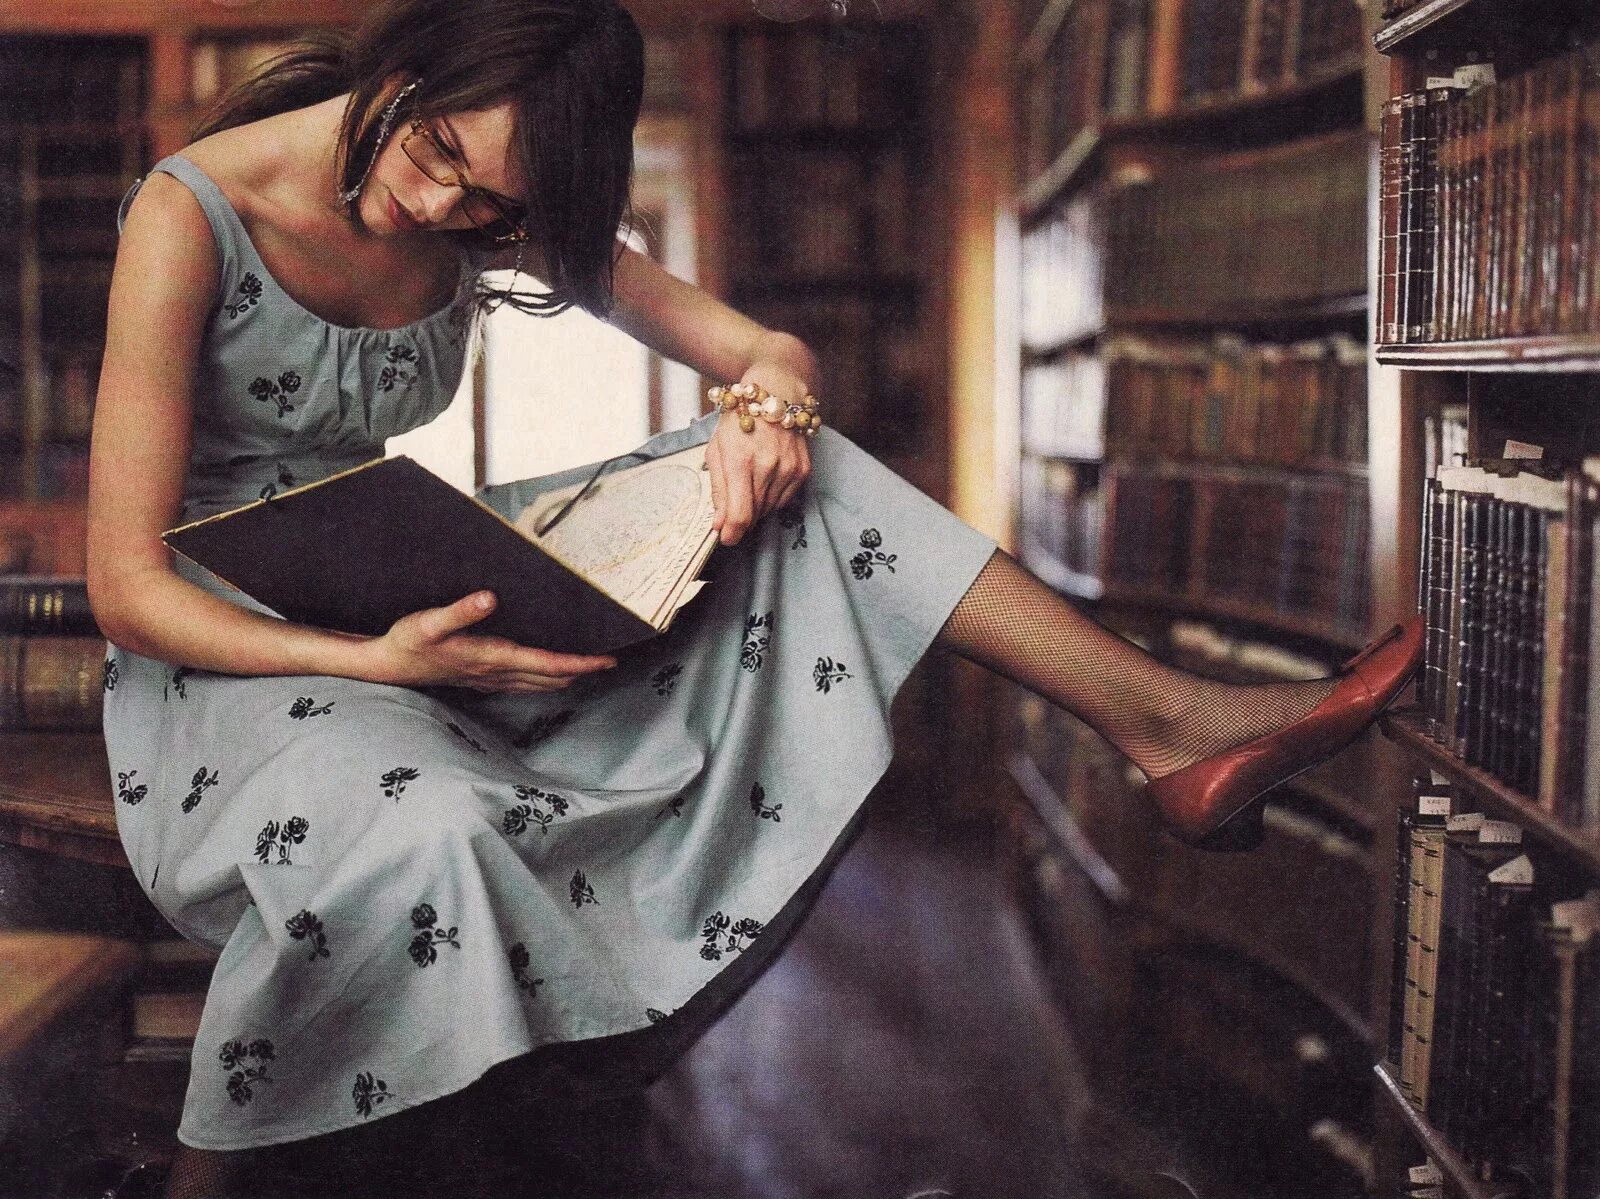 She reads magazines. Женщина с книгой. Чтение книг. Девушка читает. Женщина читает книгу.